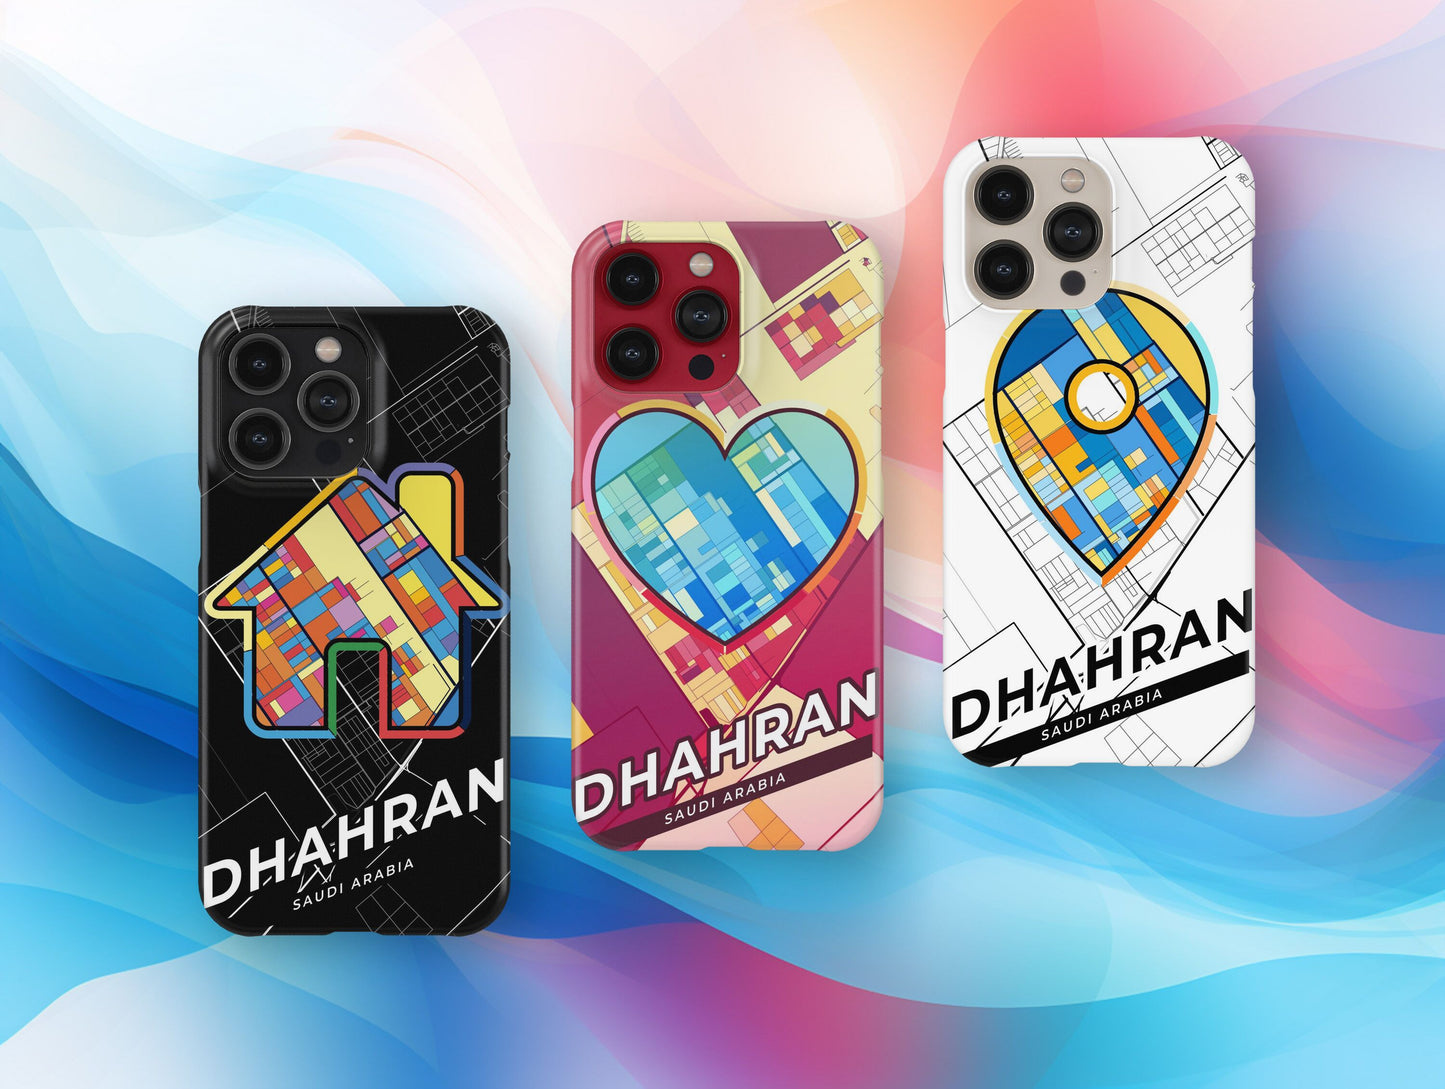 Dhahran Saudi Arabia slim phone case with colorful icon. Birthday, wedding or housewarming gift. Couple match cases.